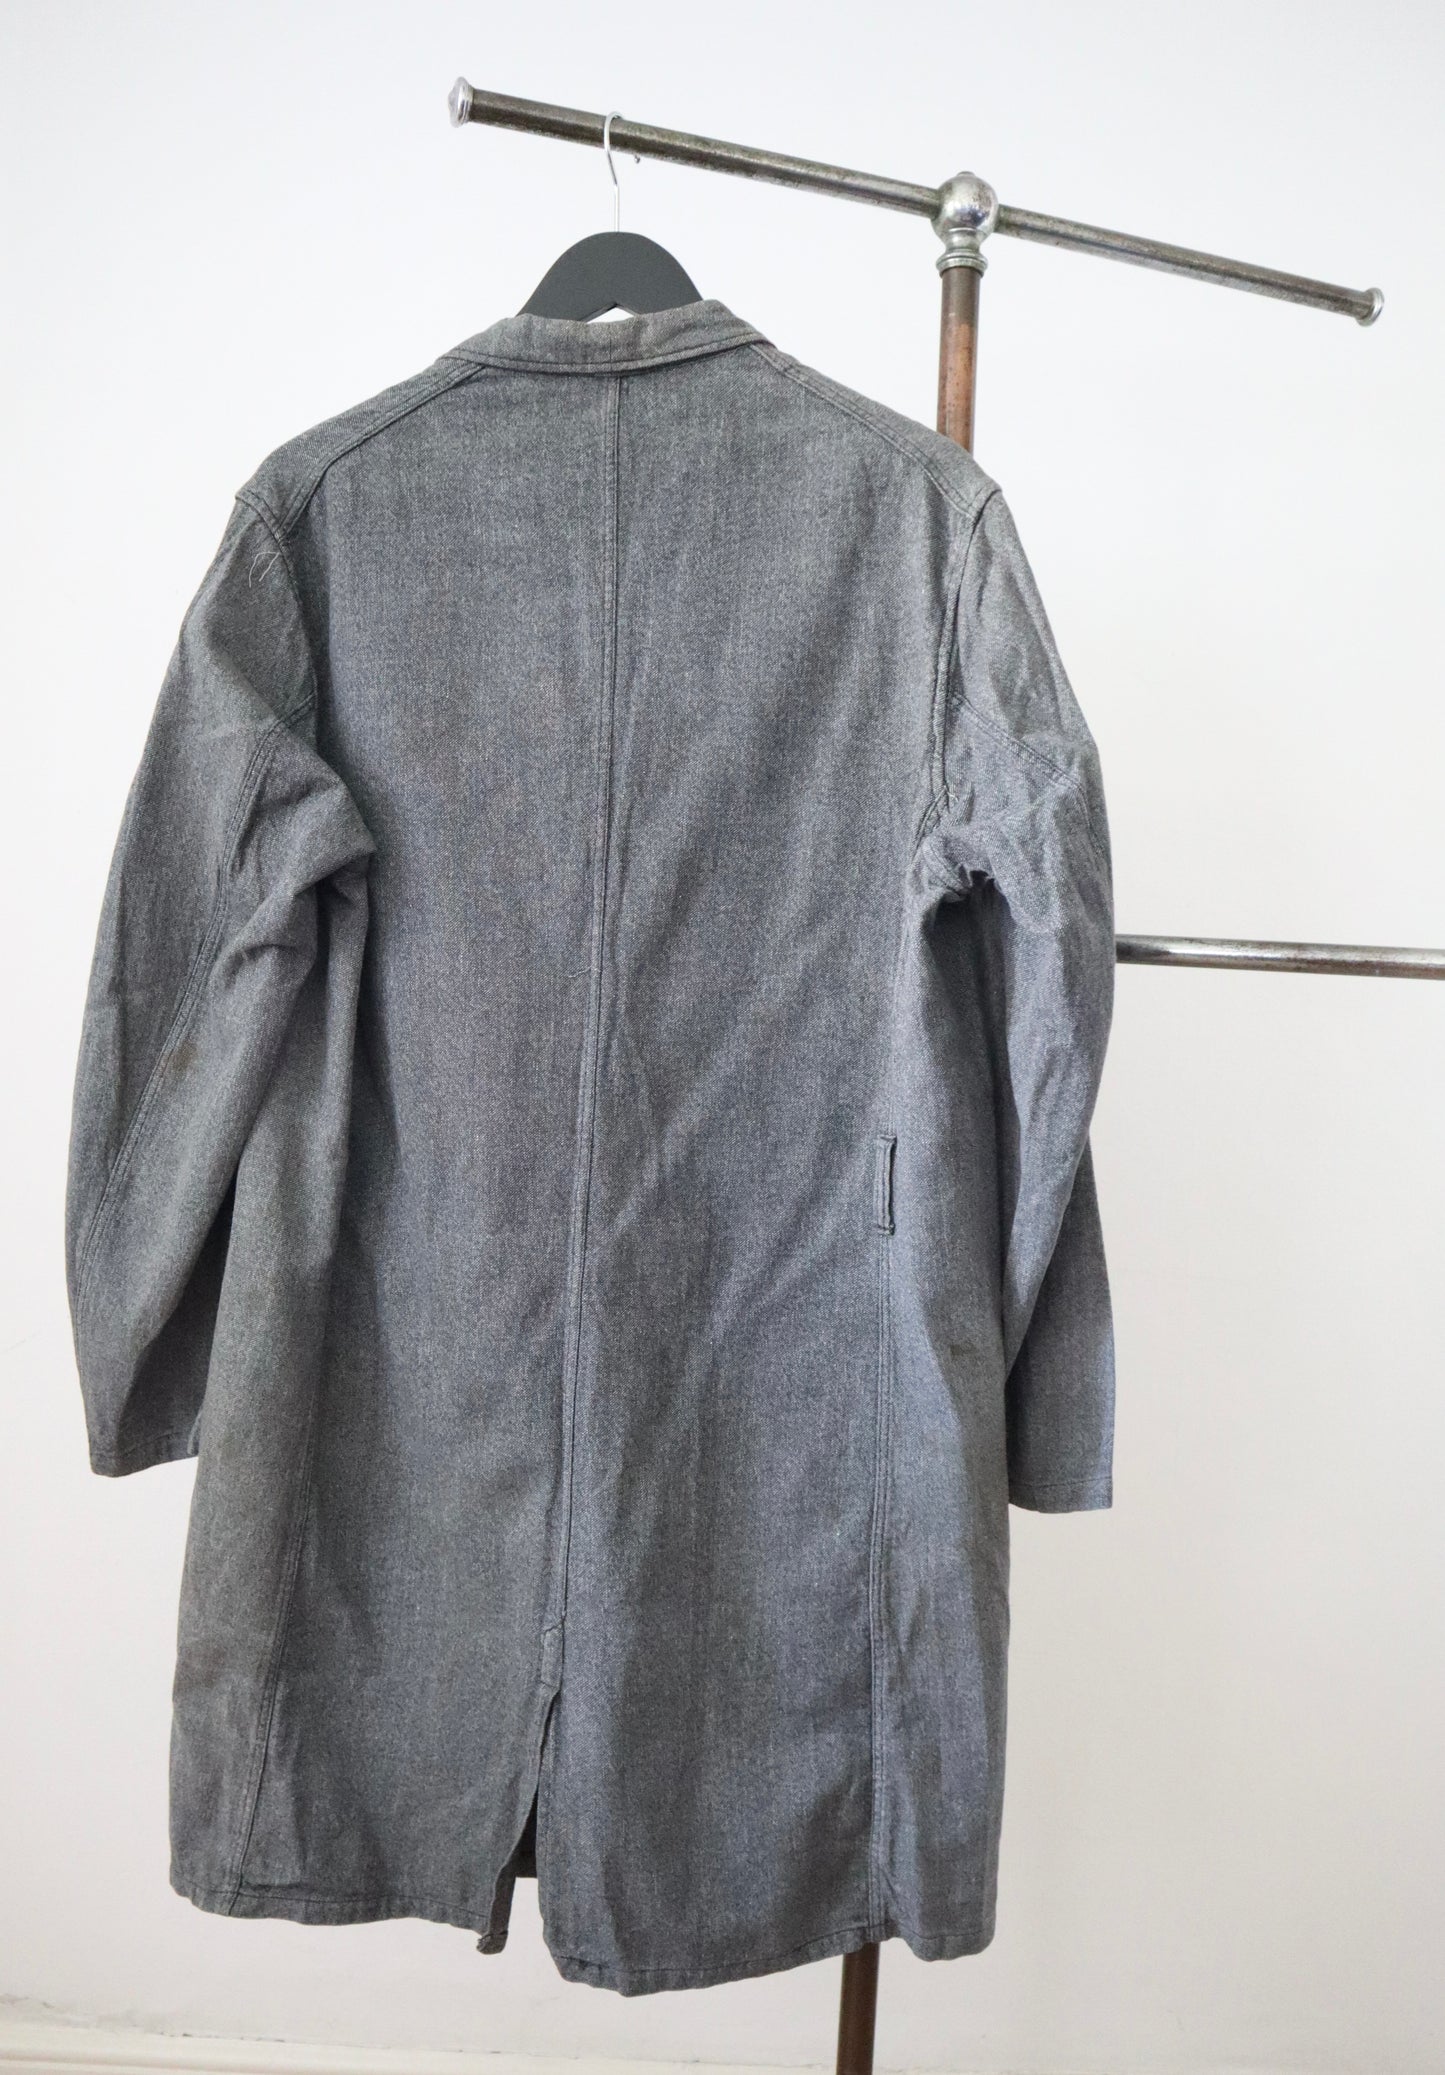 1950s French Grey Workwear Duster Jacket Coat Cotton Chore VETRA